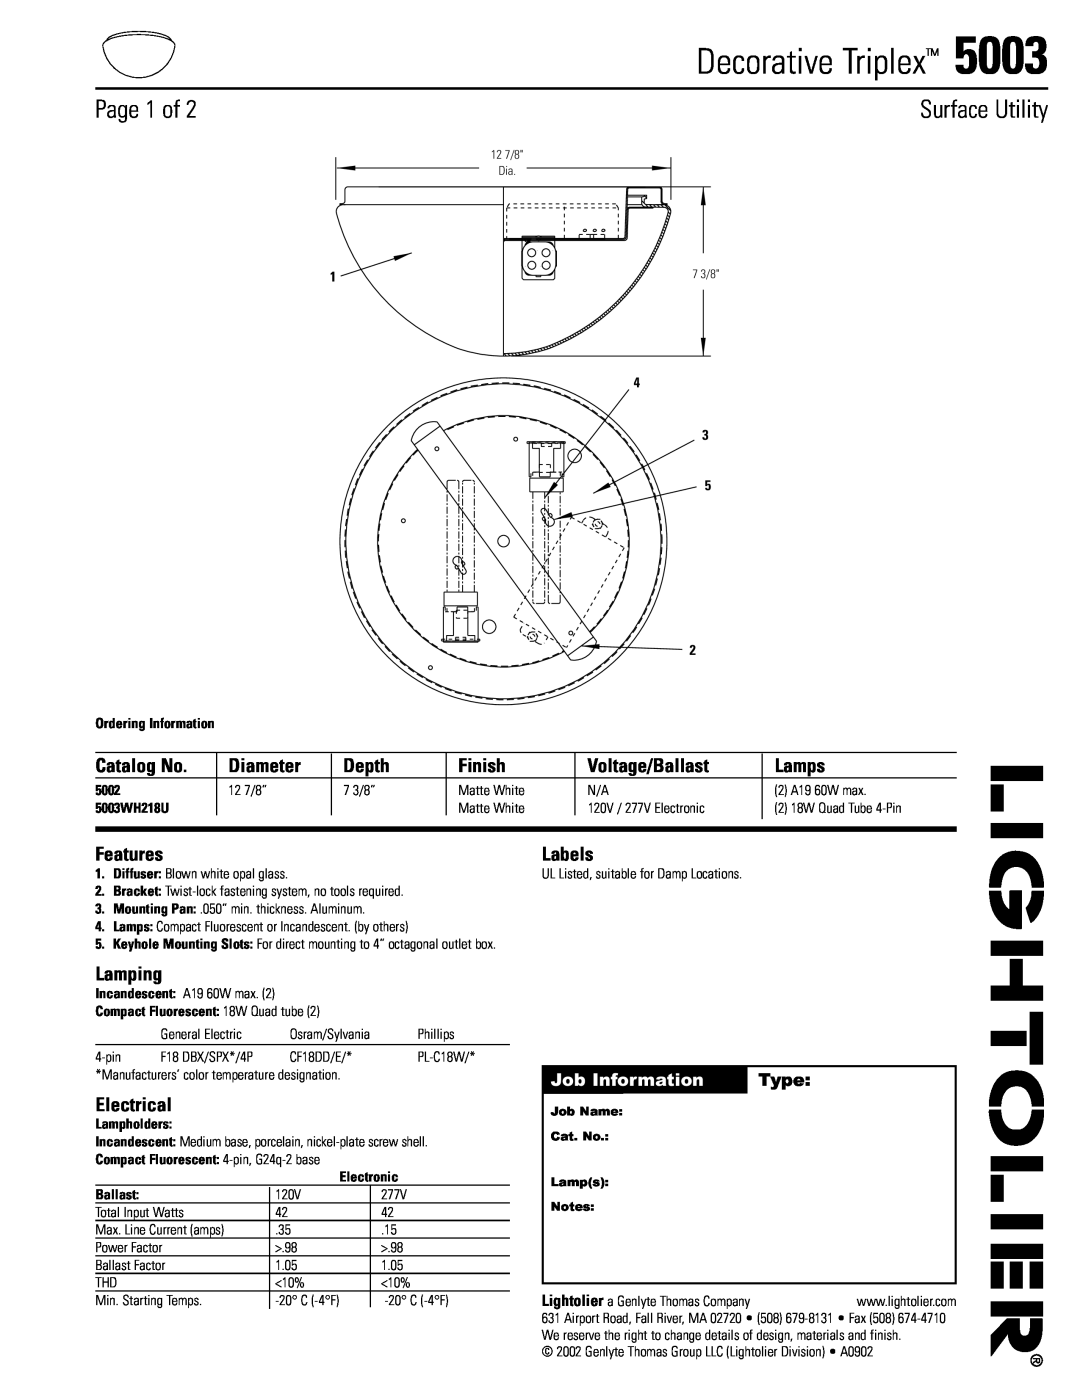 Lightolier 5003 manual Page 1 of, Surface Utility, Job Information, Type, Decorative Triplex, Catalog No, Diameter, Depth 